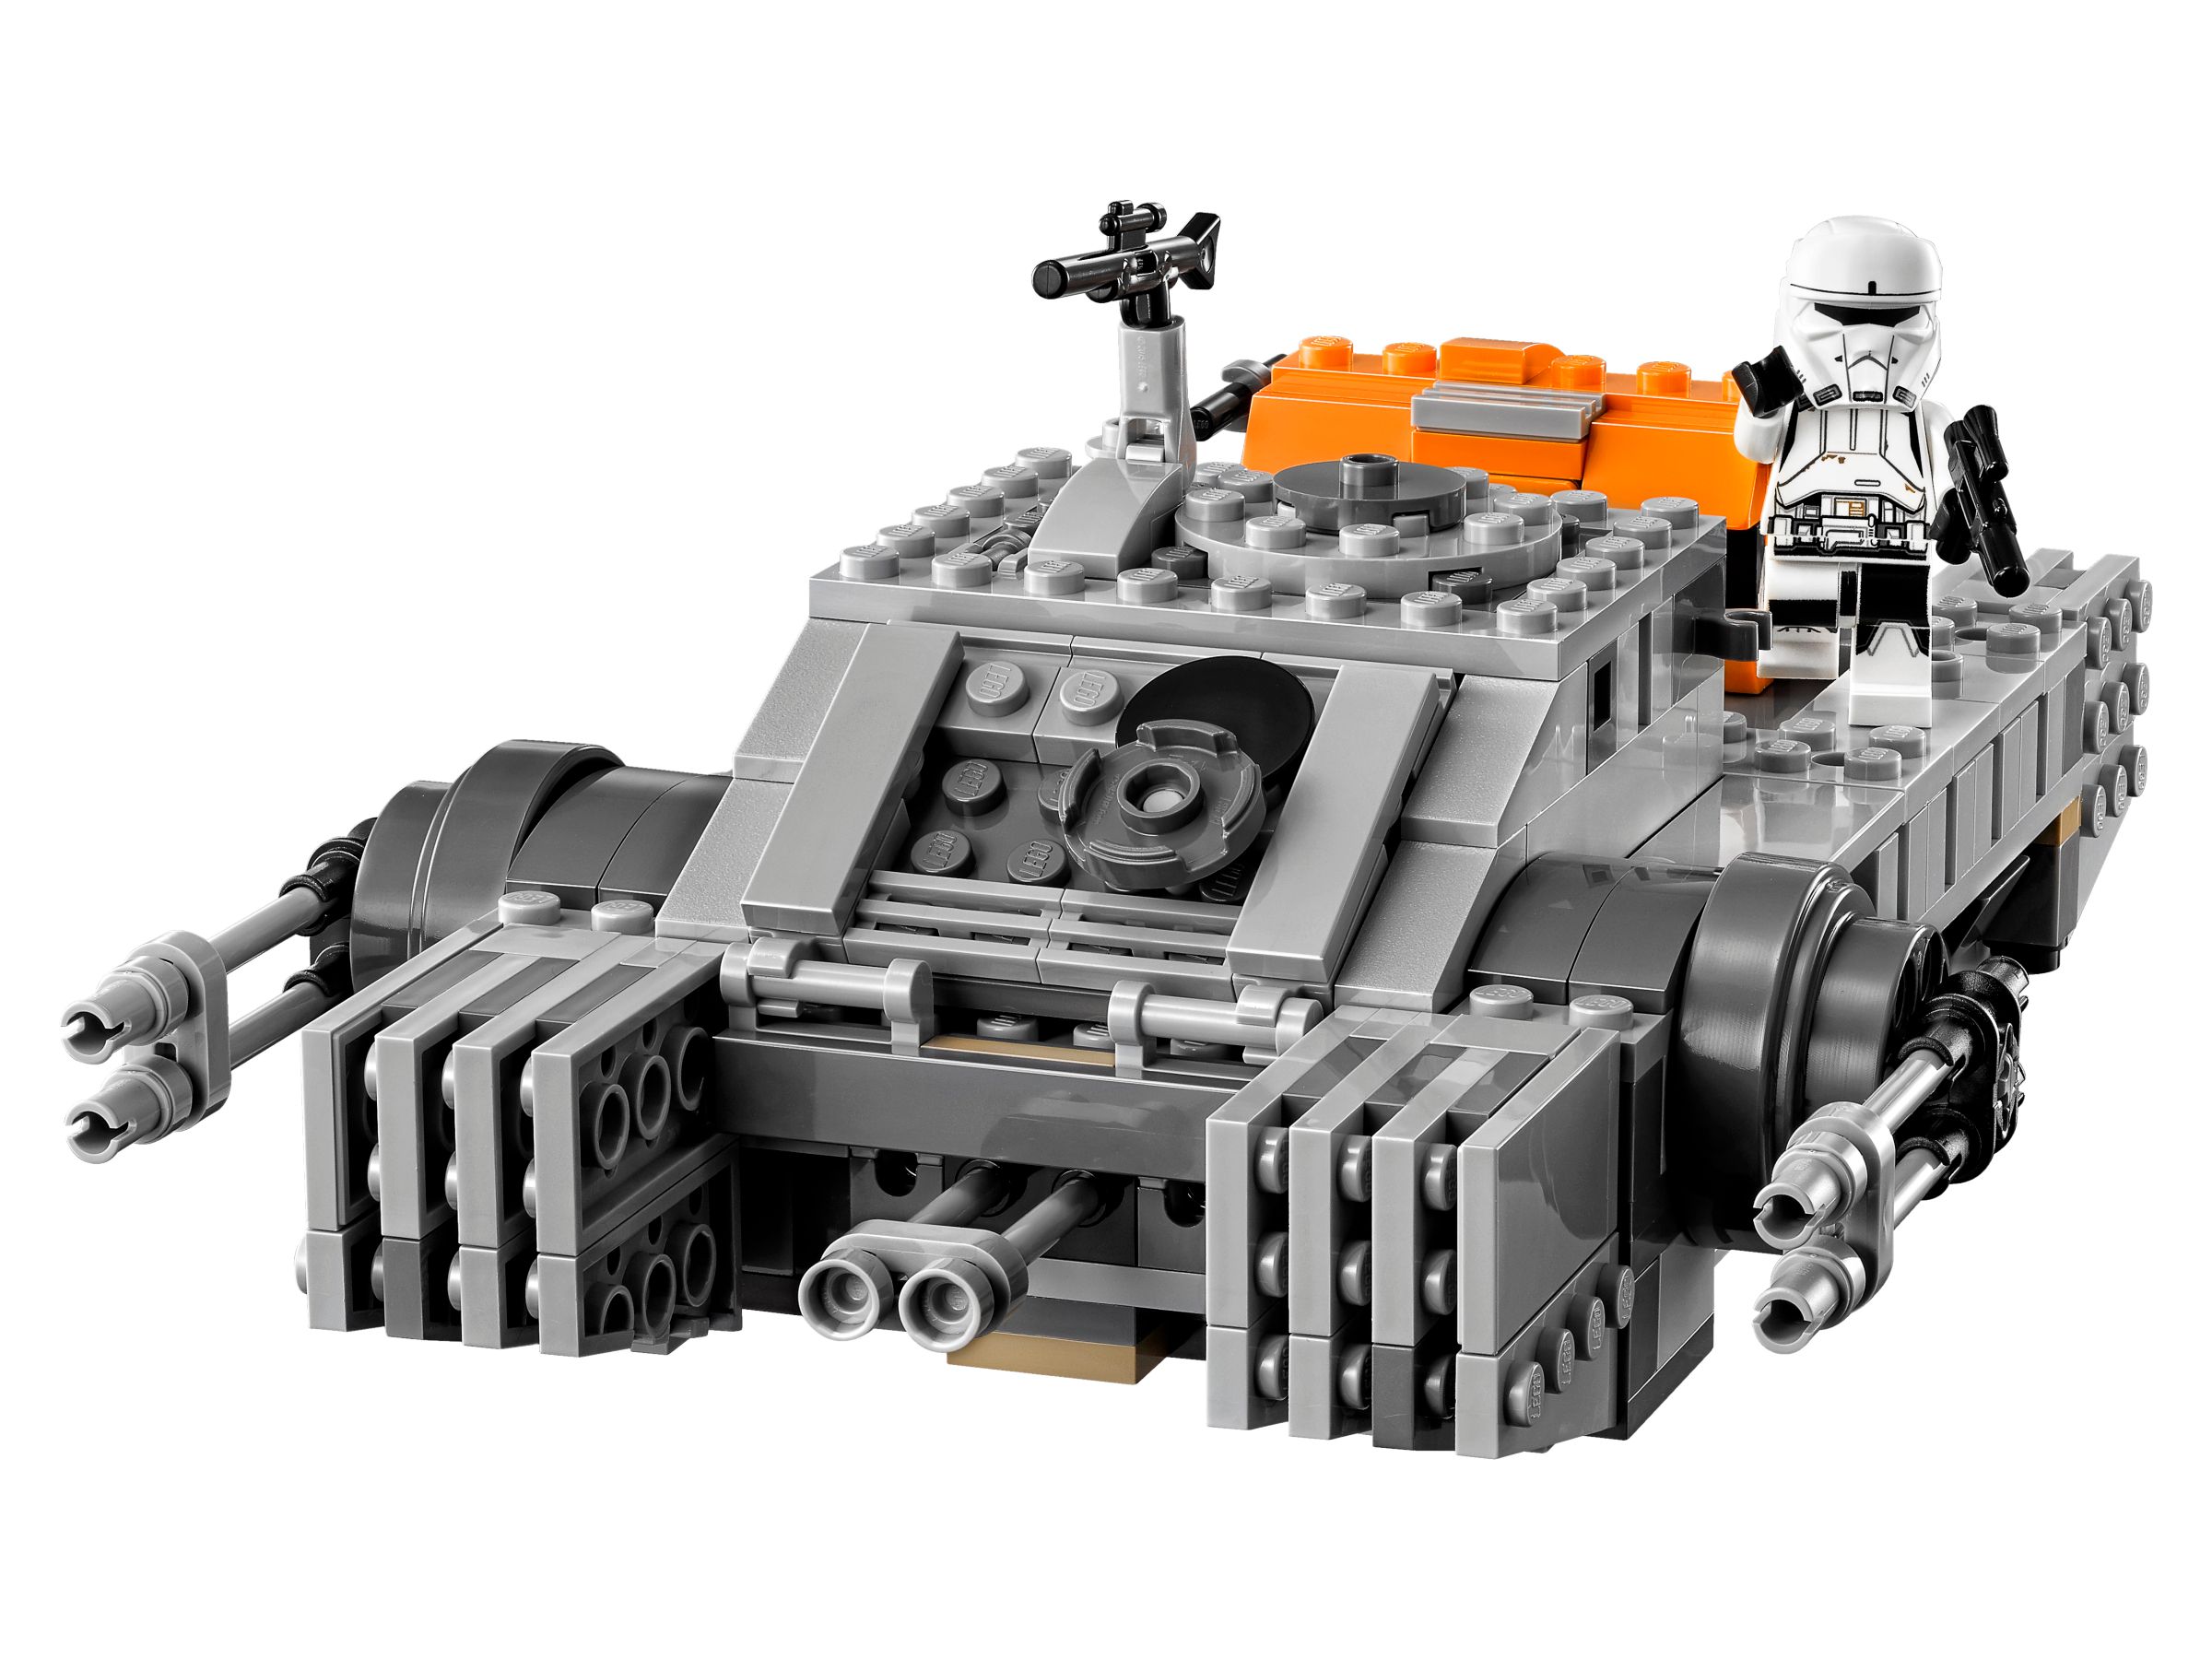 LEGO Star Wars 75152 Imperial Assault Hovertank™ LEGO_75152_alt6.jpg